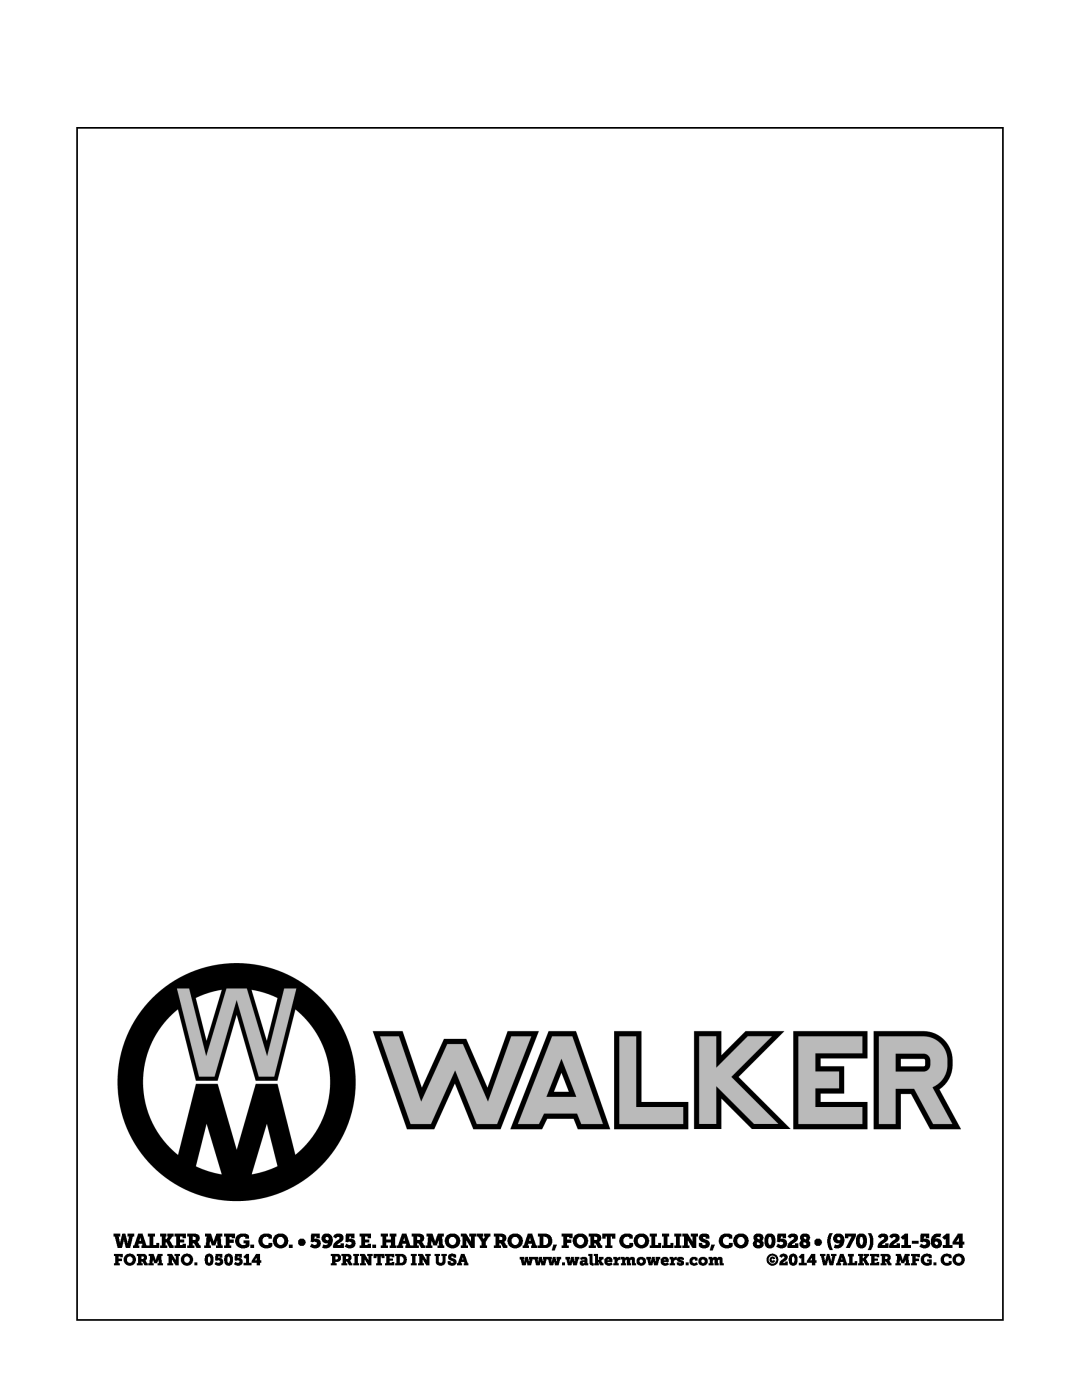 Walker S14 manual Form No, Printed In Usa, Walker Mfg. Co 